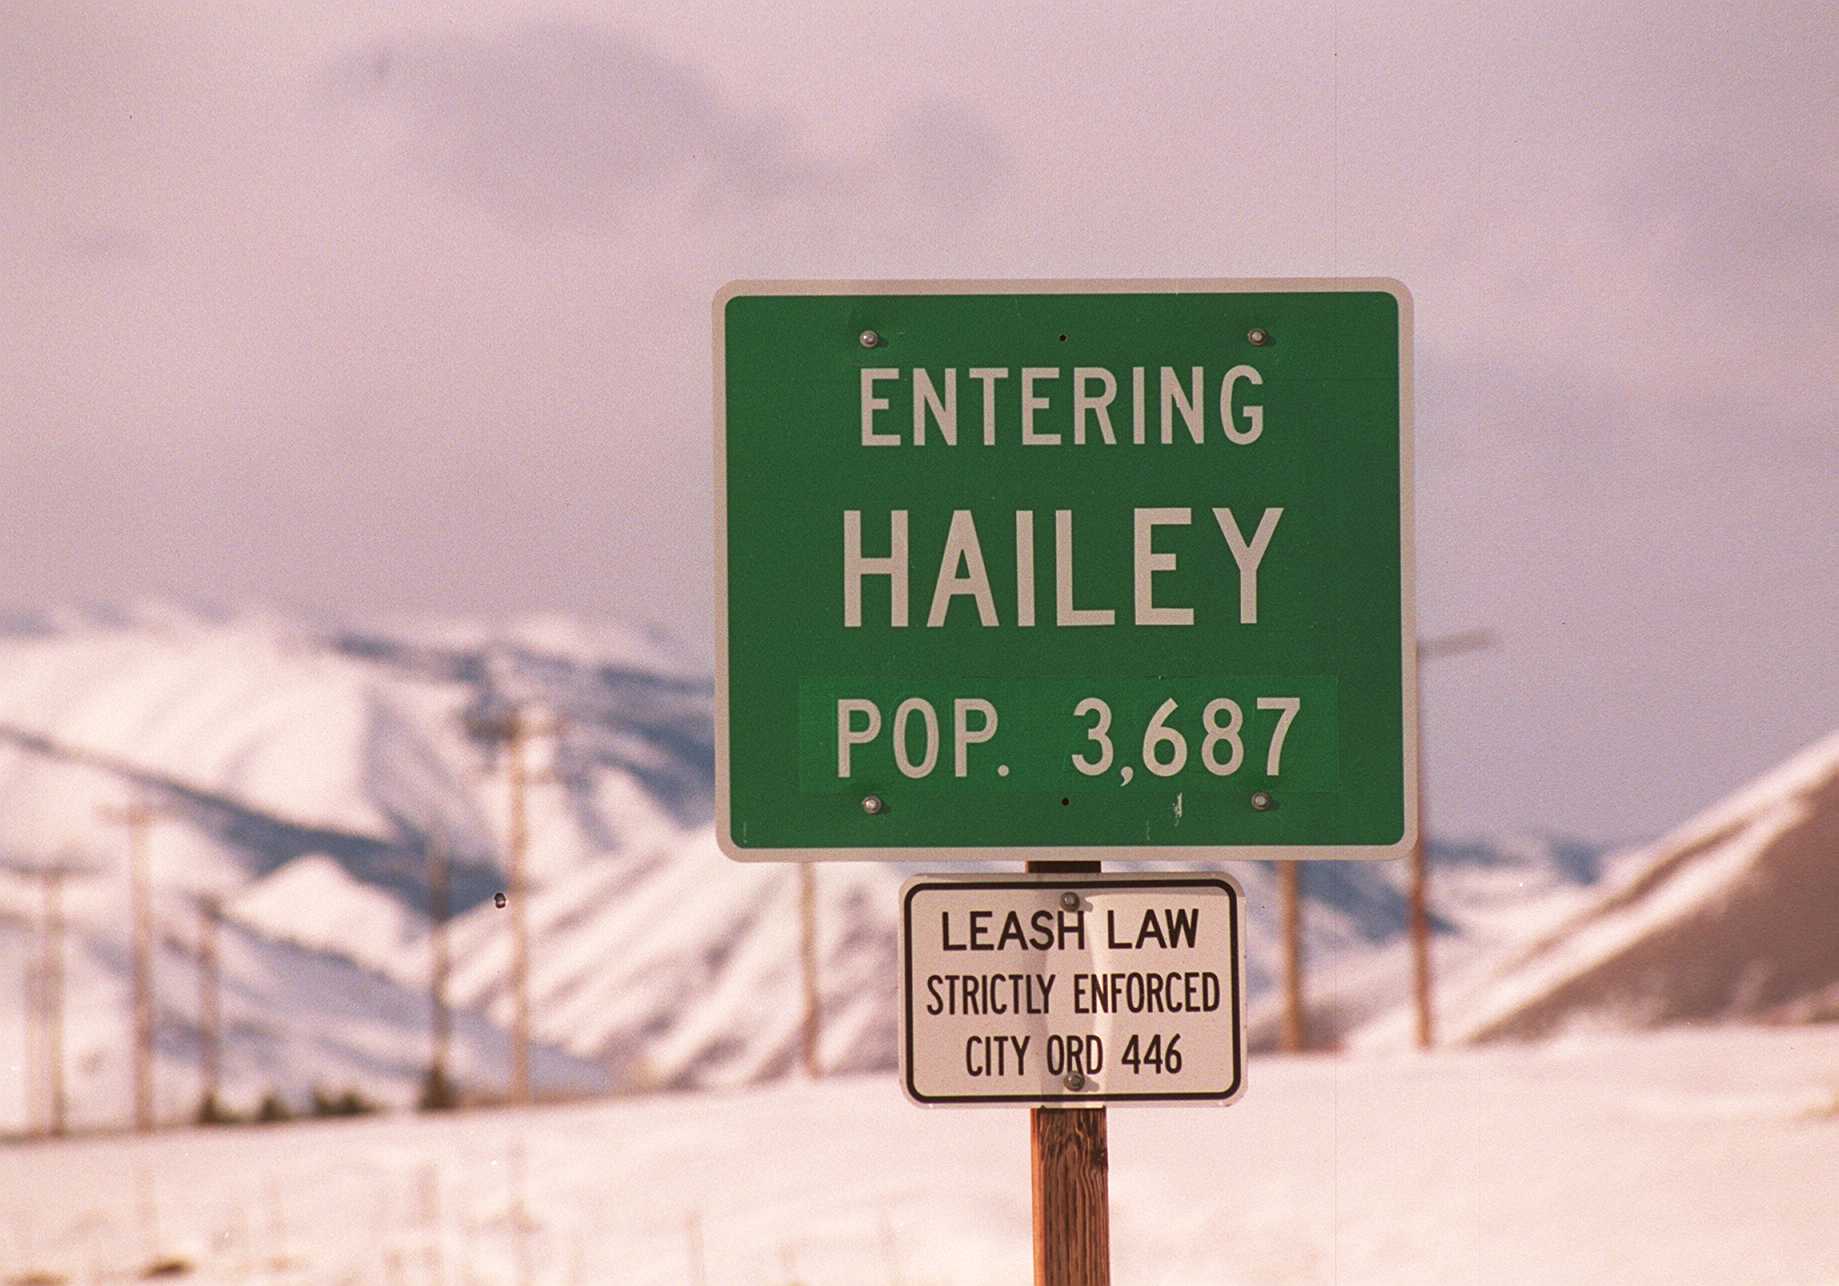 Hailey Iadaho General Phots Of Hailey Idaho Where Bruce Willias And Demi Moore Have Bought V